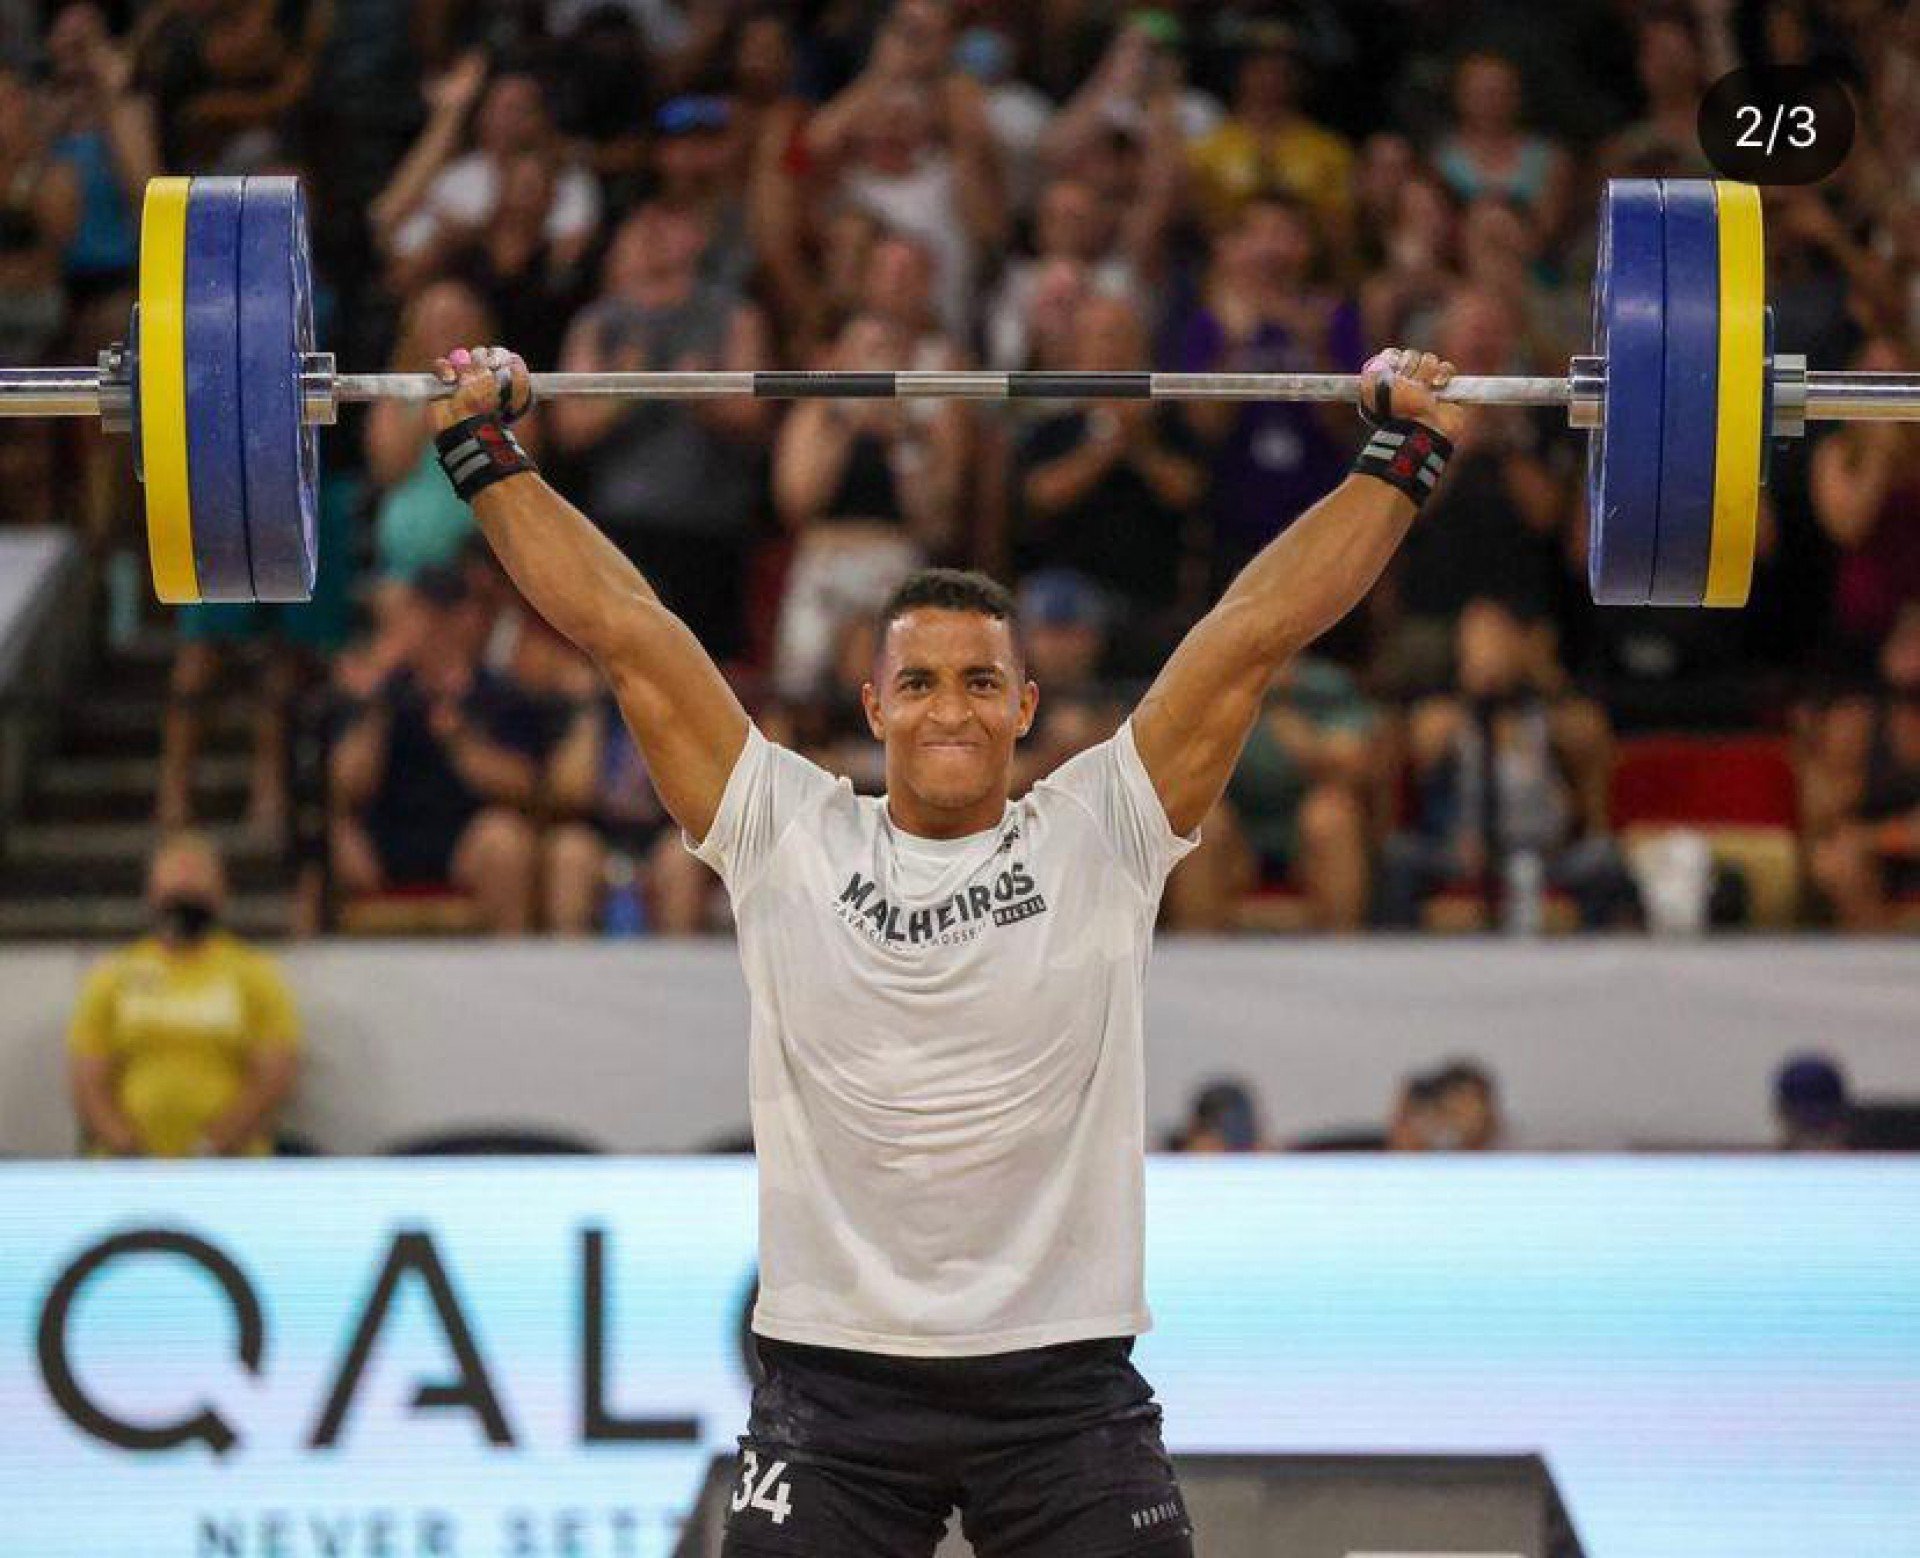 Único brasileiro Gui Malheiros é TOP 10 na 'Olimpíada do CrossFit' MH